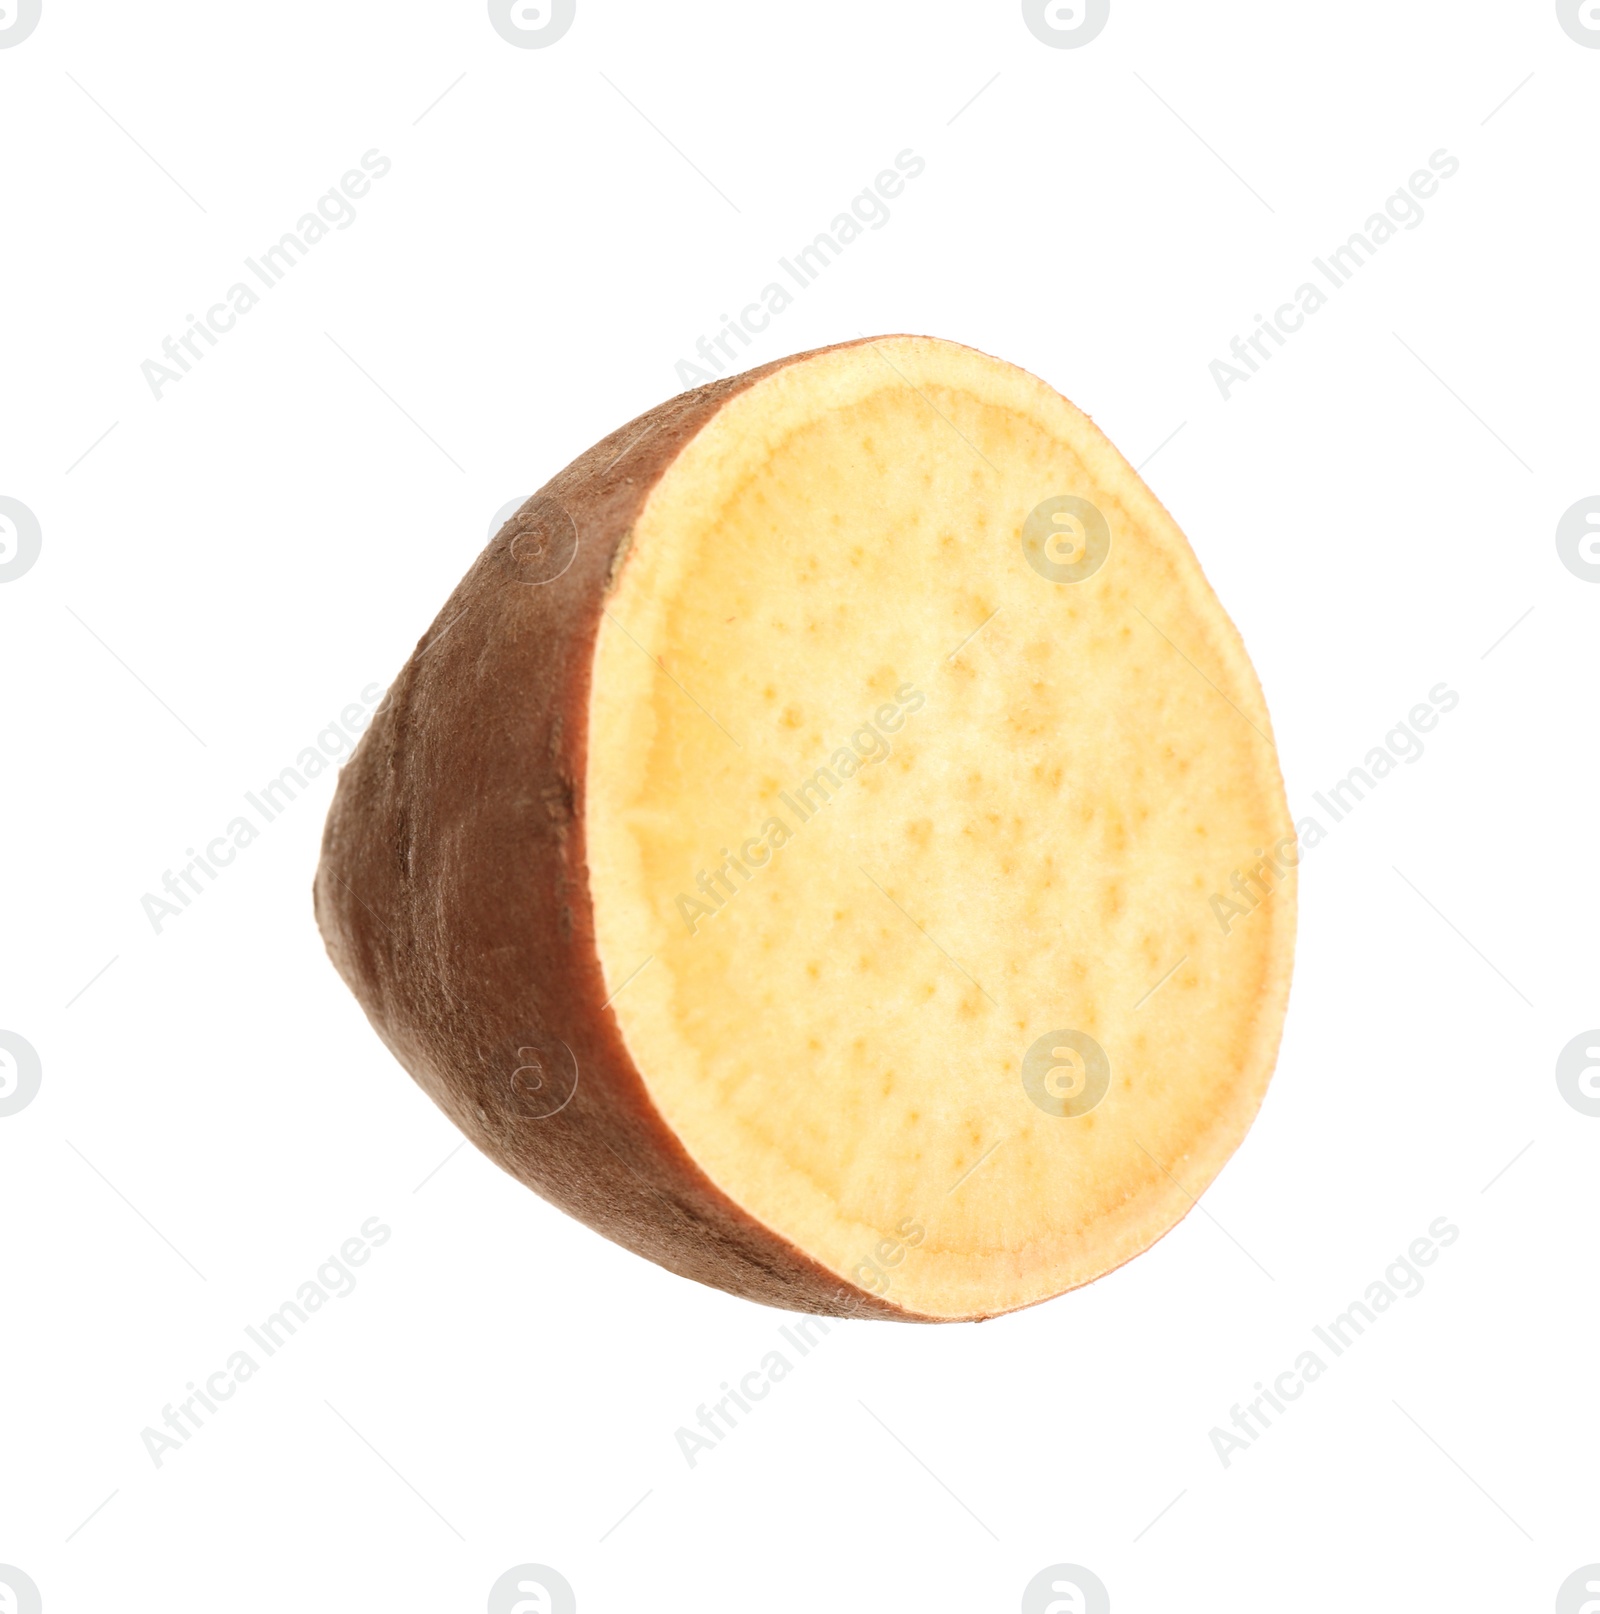 Photo of Piece of fresh ripe sweet potato isolated on white